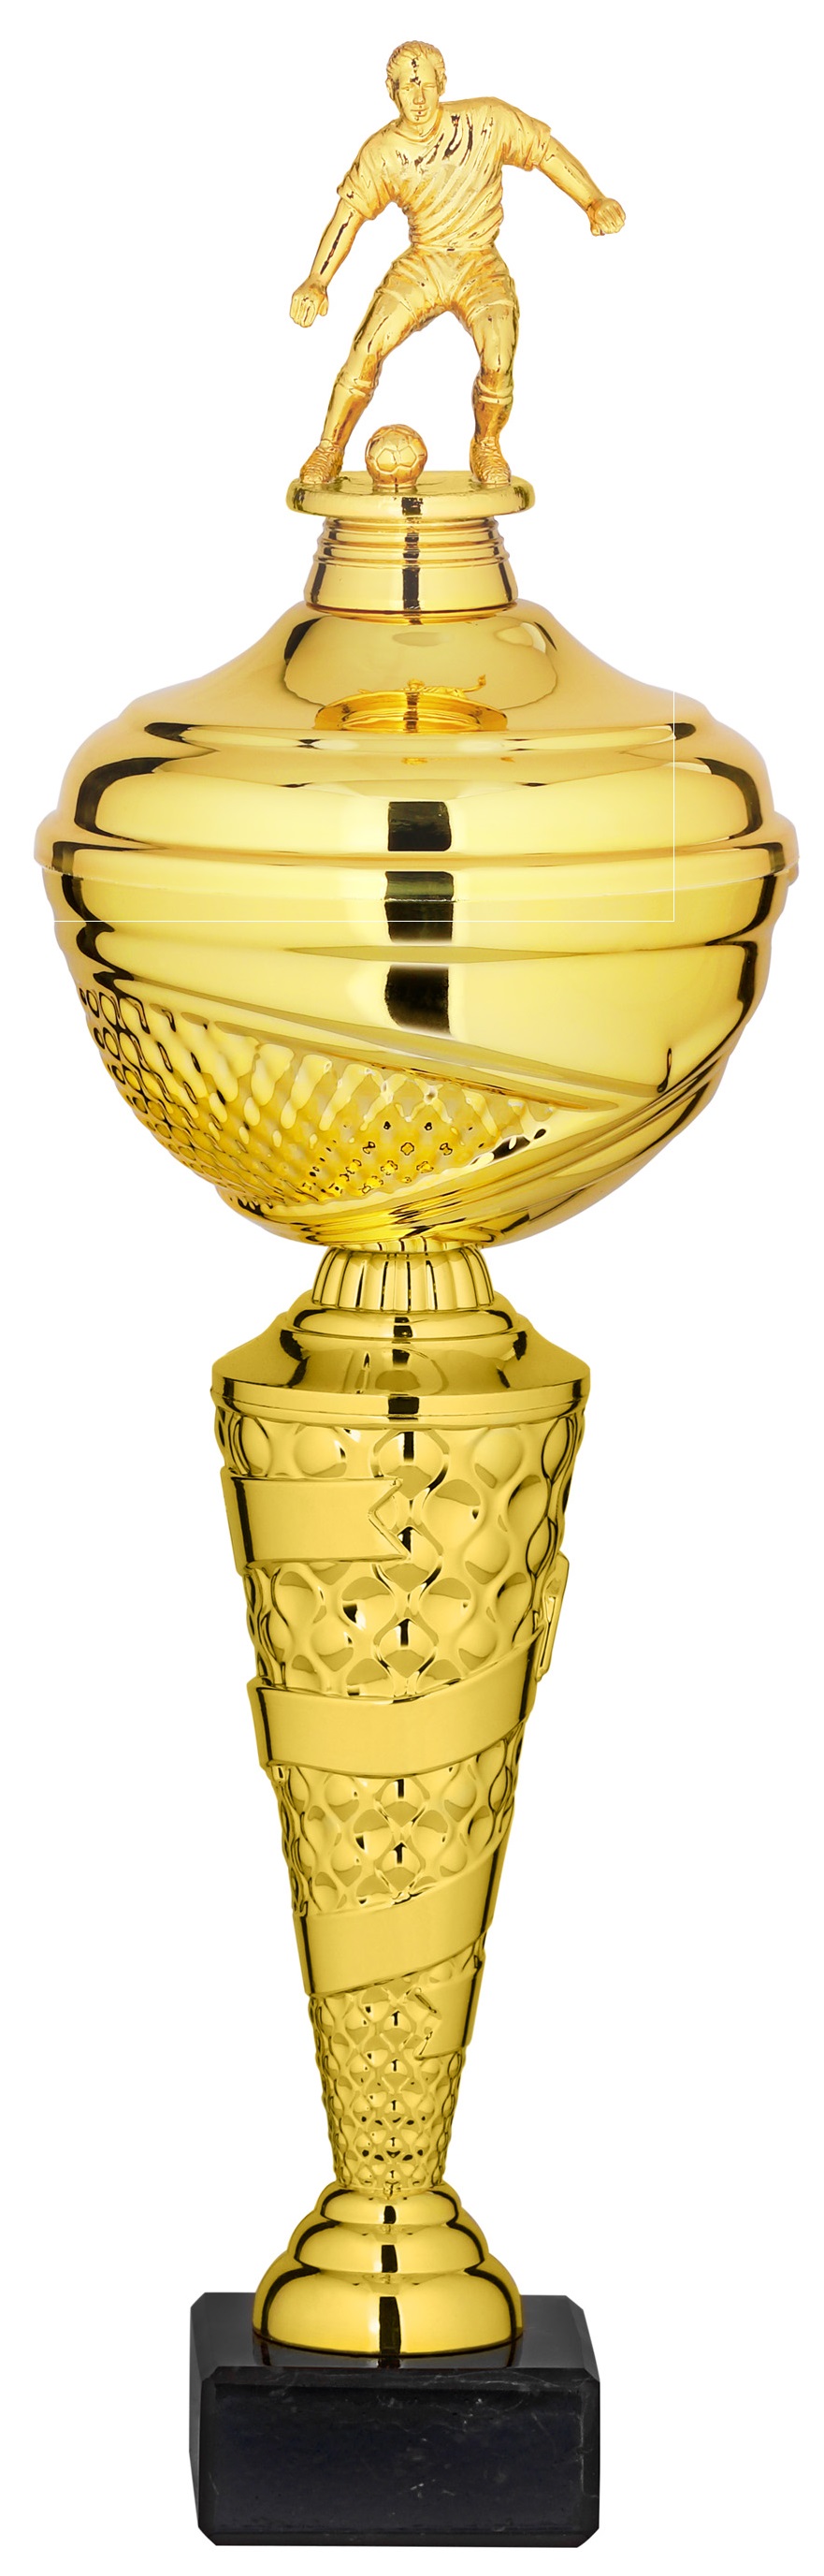 Fußball-Pokal P600-Gold  inkl. Gravur  51,0 cm